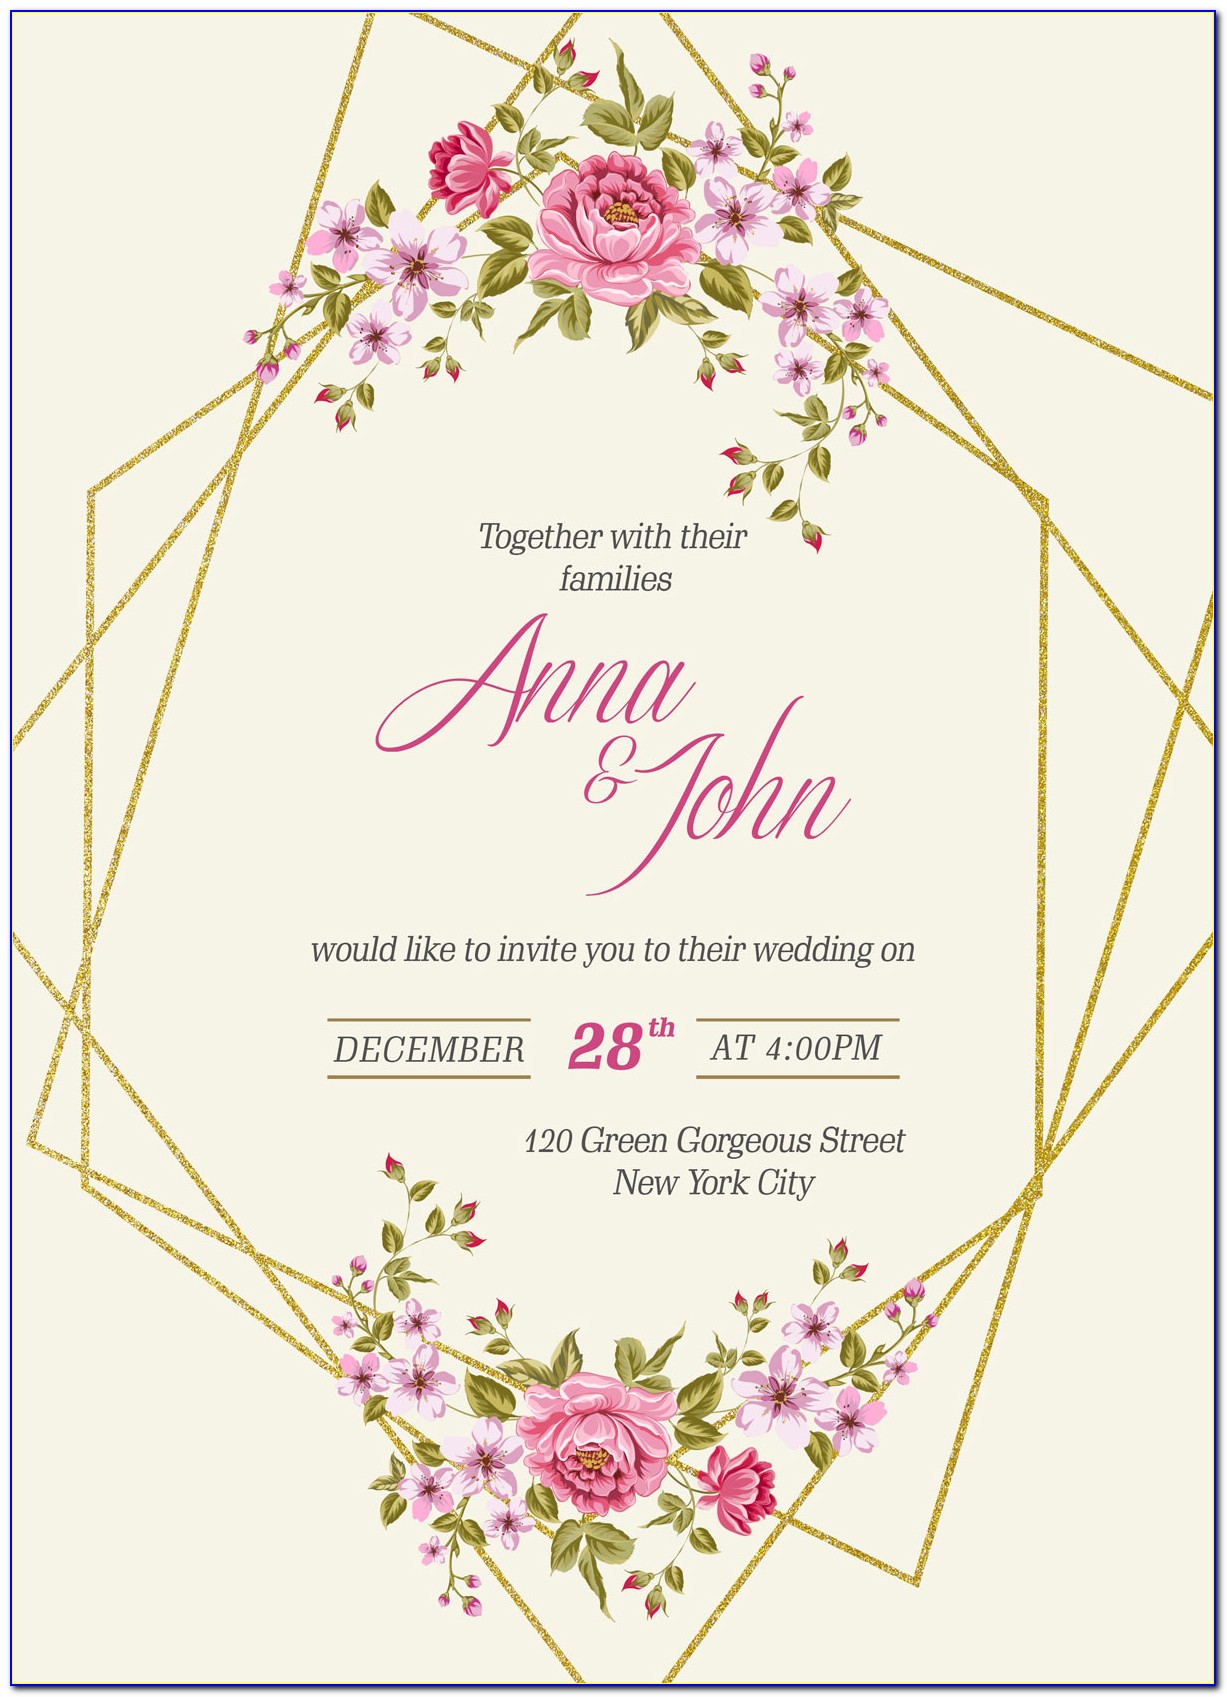 Download Invitation Card Background